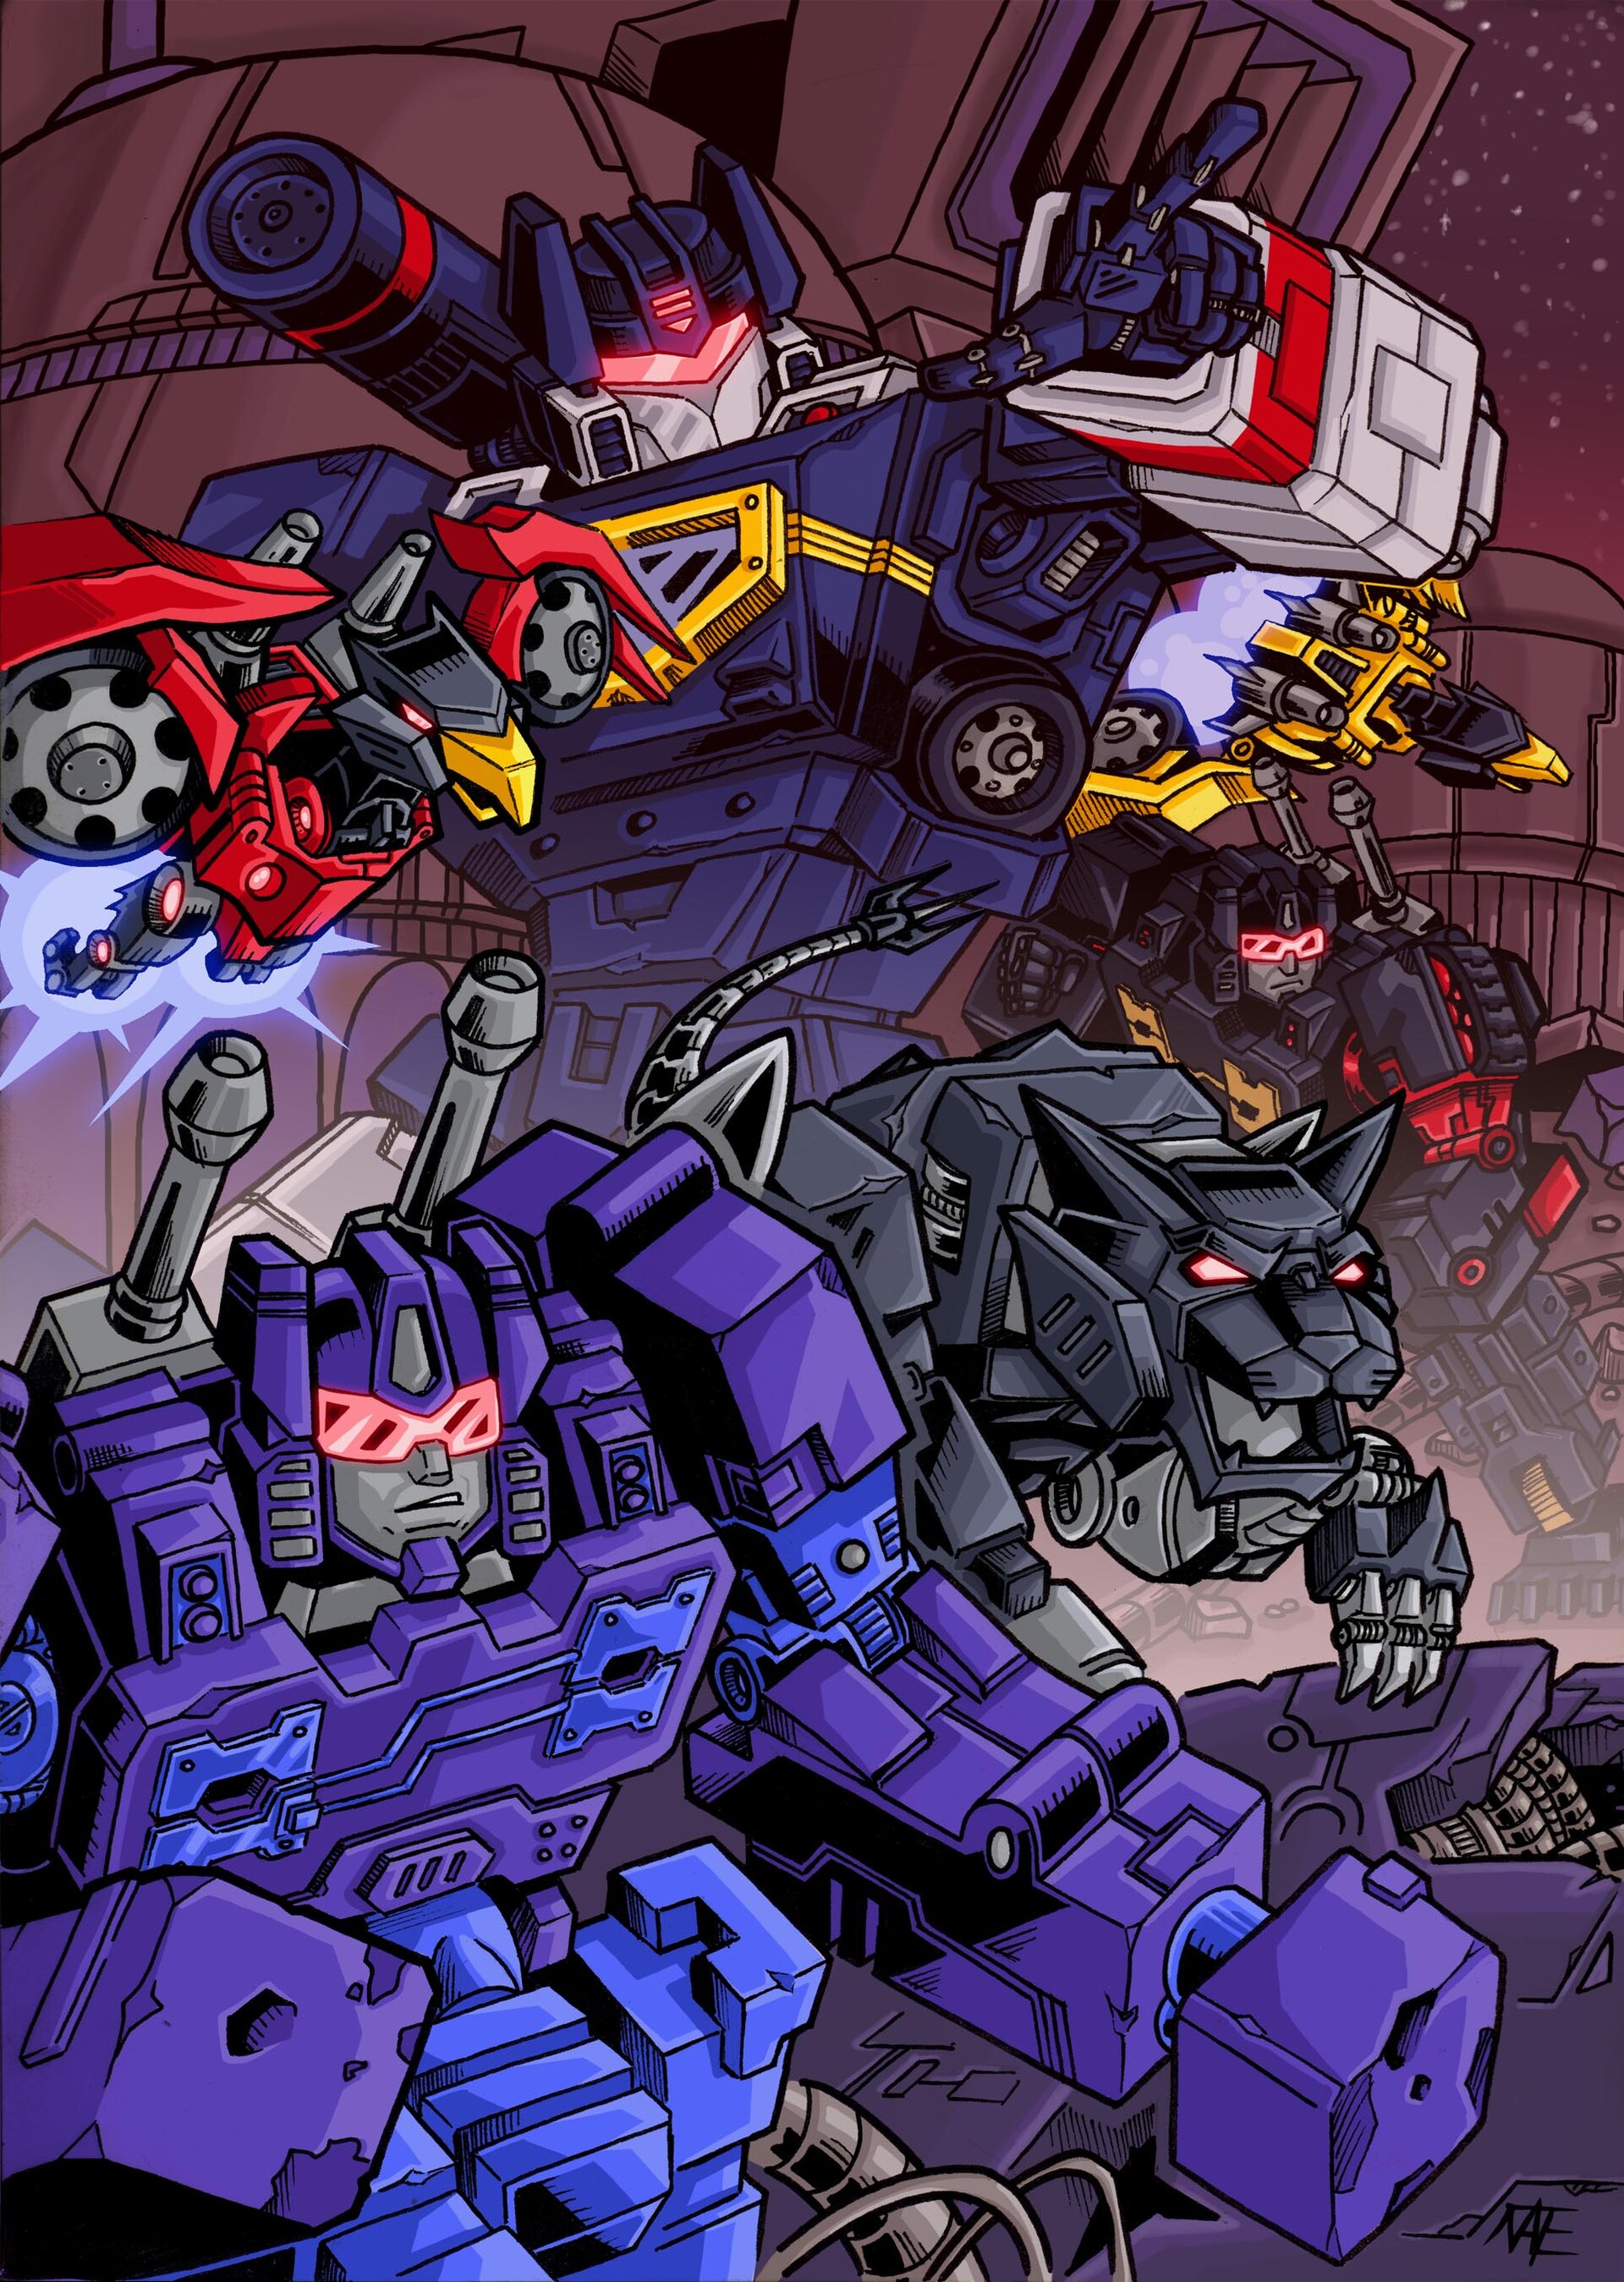 Fan Art of Soundwave from IDW's Transformers comics. 